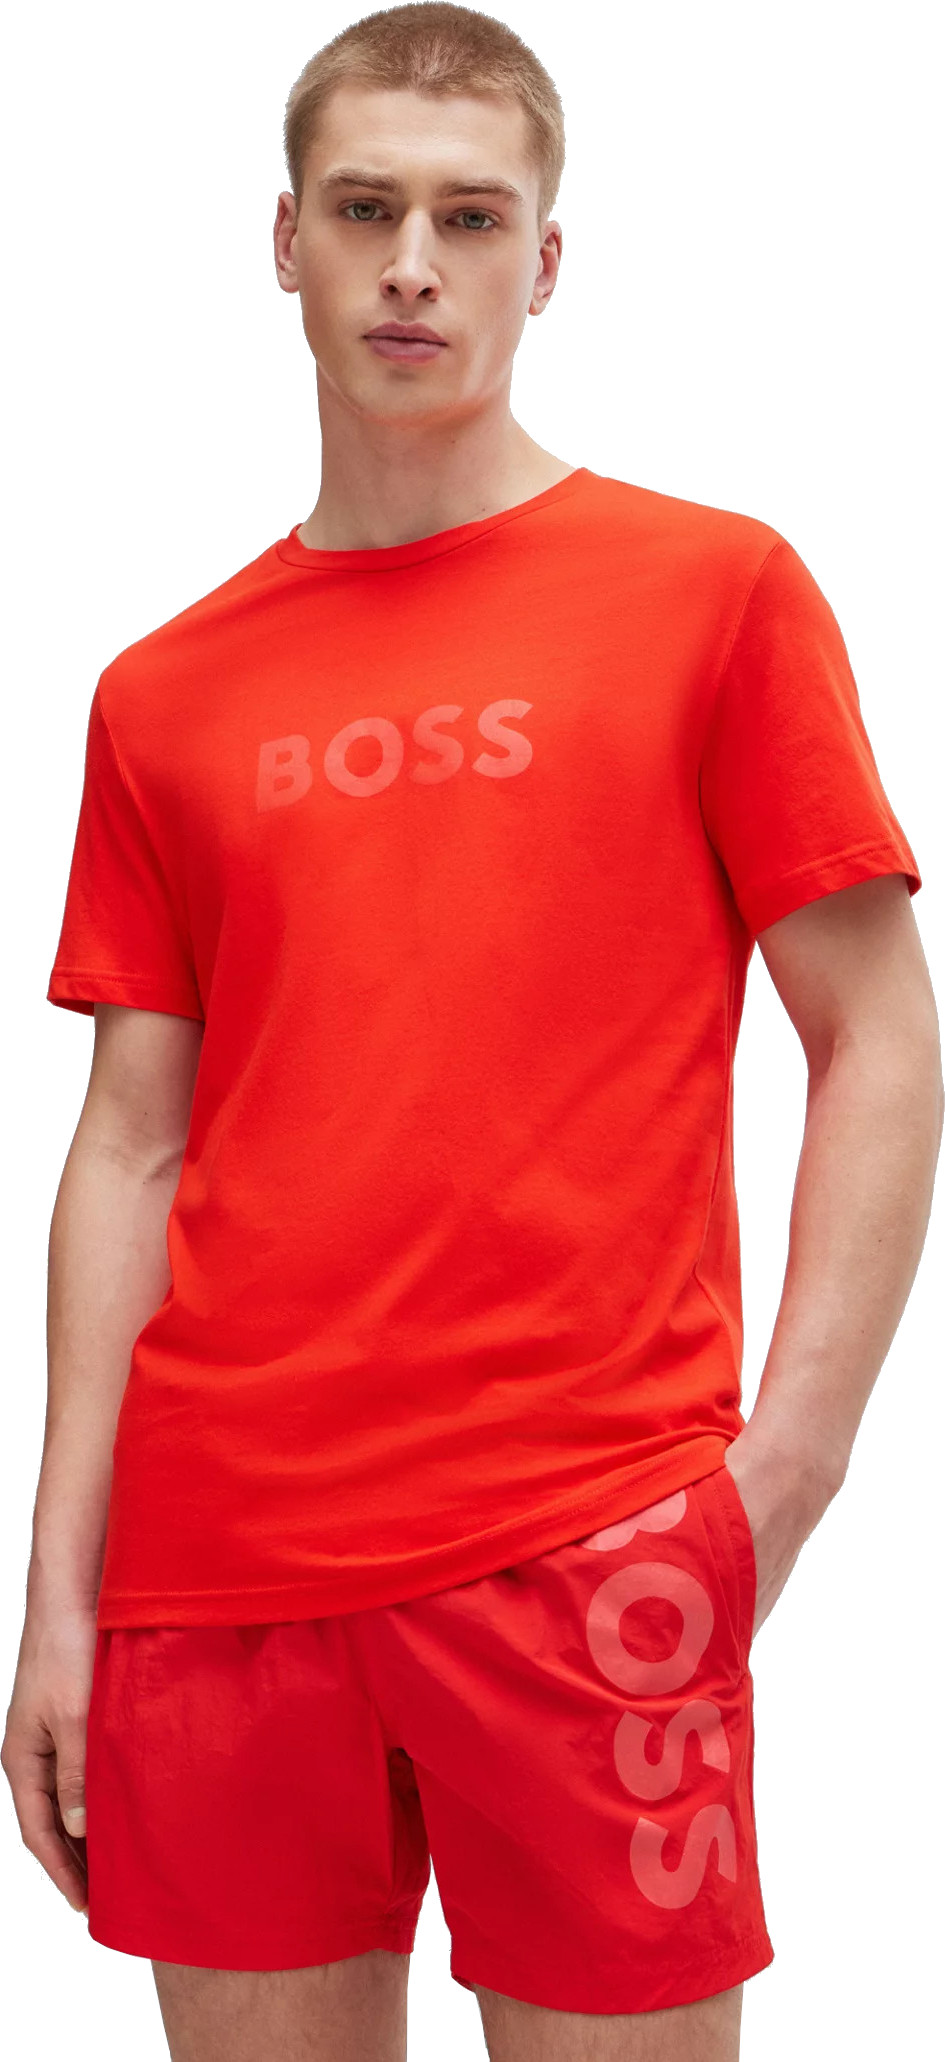 Hugo Boss Pánské triko BOSS 50503276-627 XL